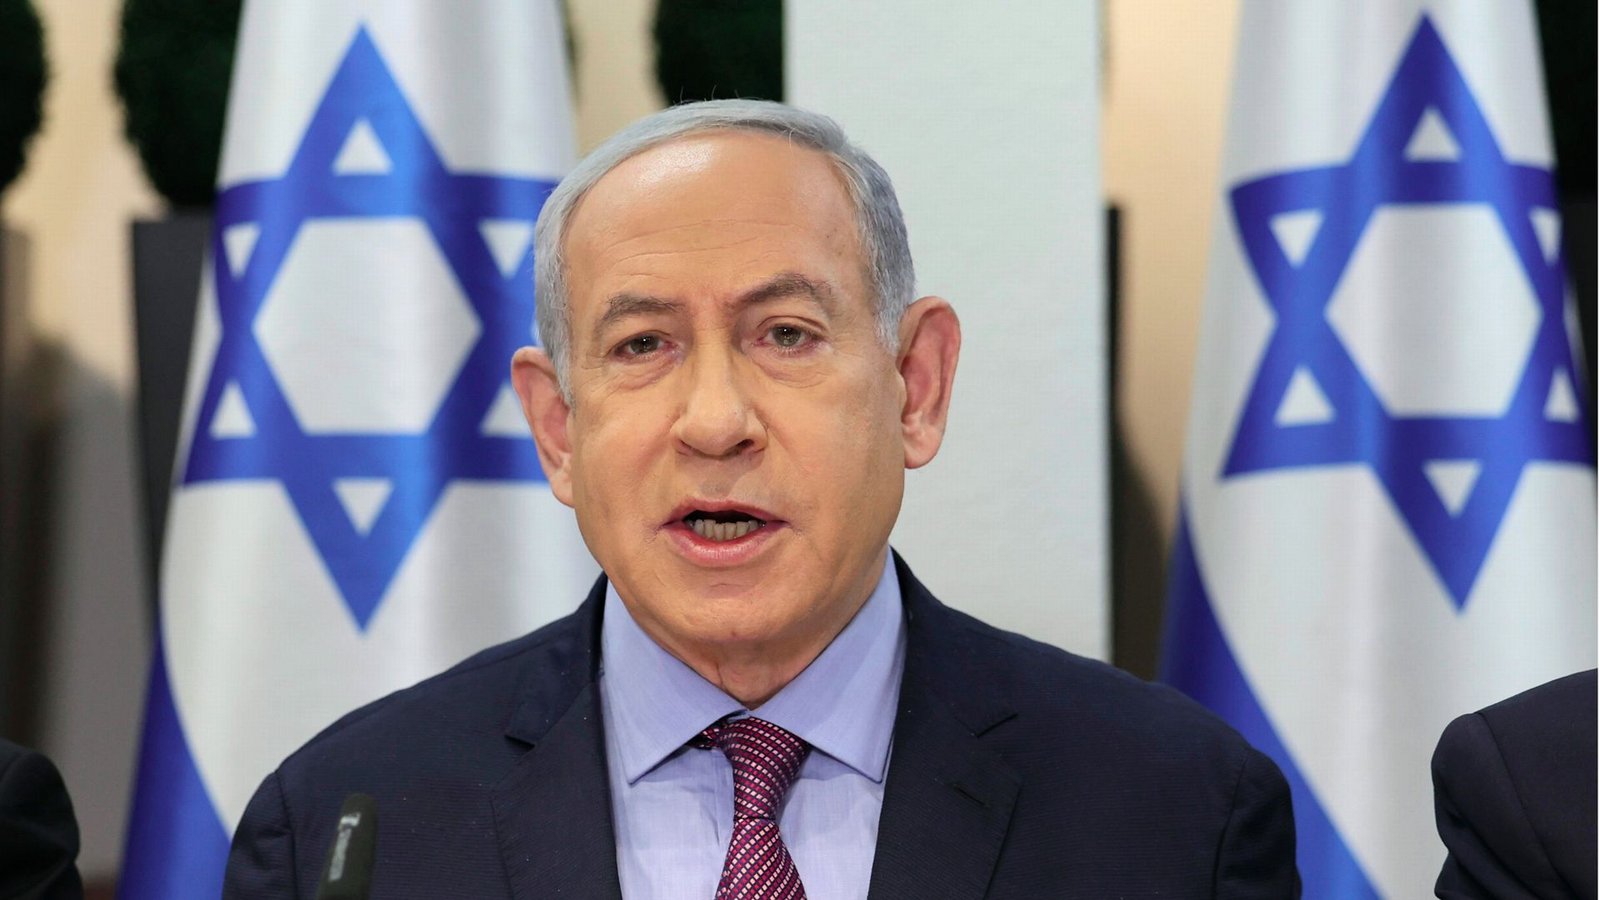 Benjamin Netanjahu steht mächtig unter Druck.Foto: Abir Sultan/AP/dpa/Abir Sultan